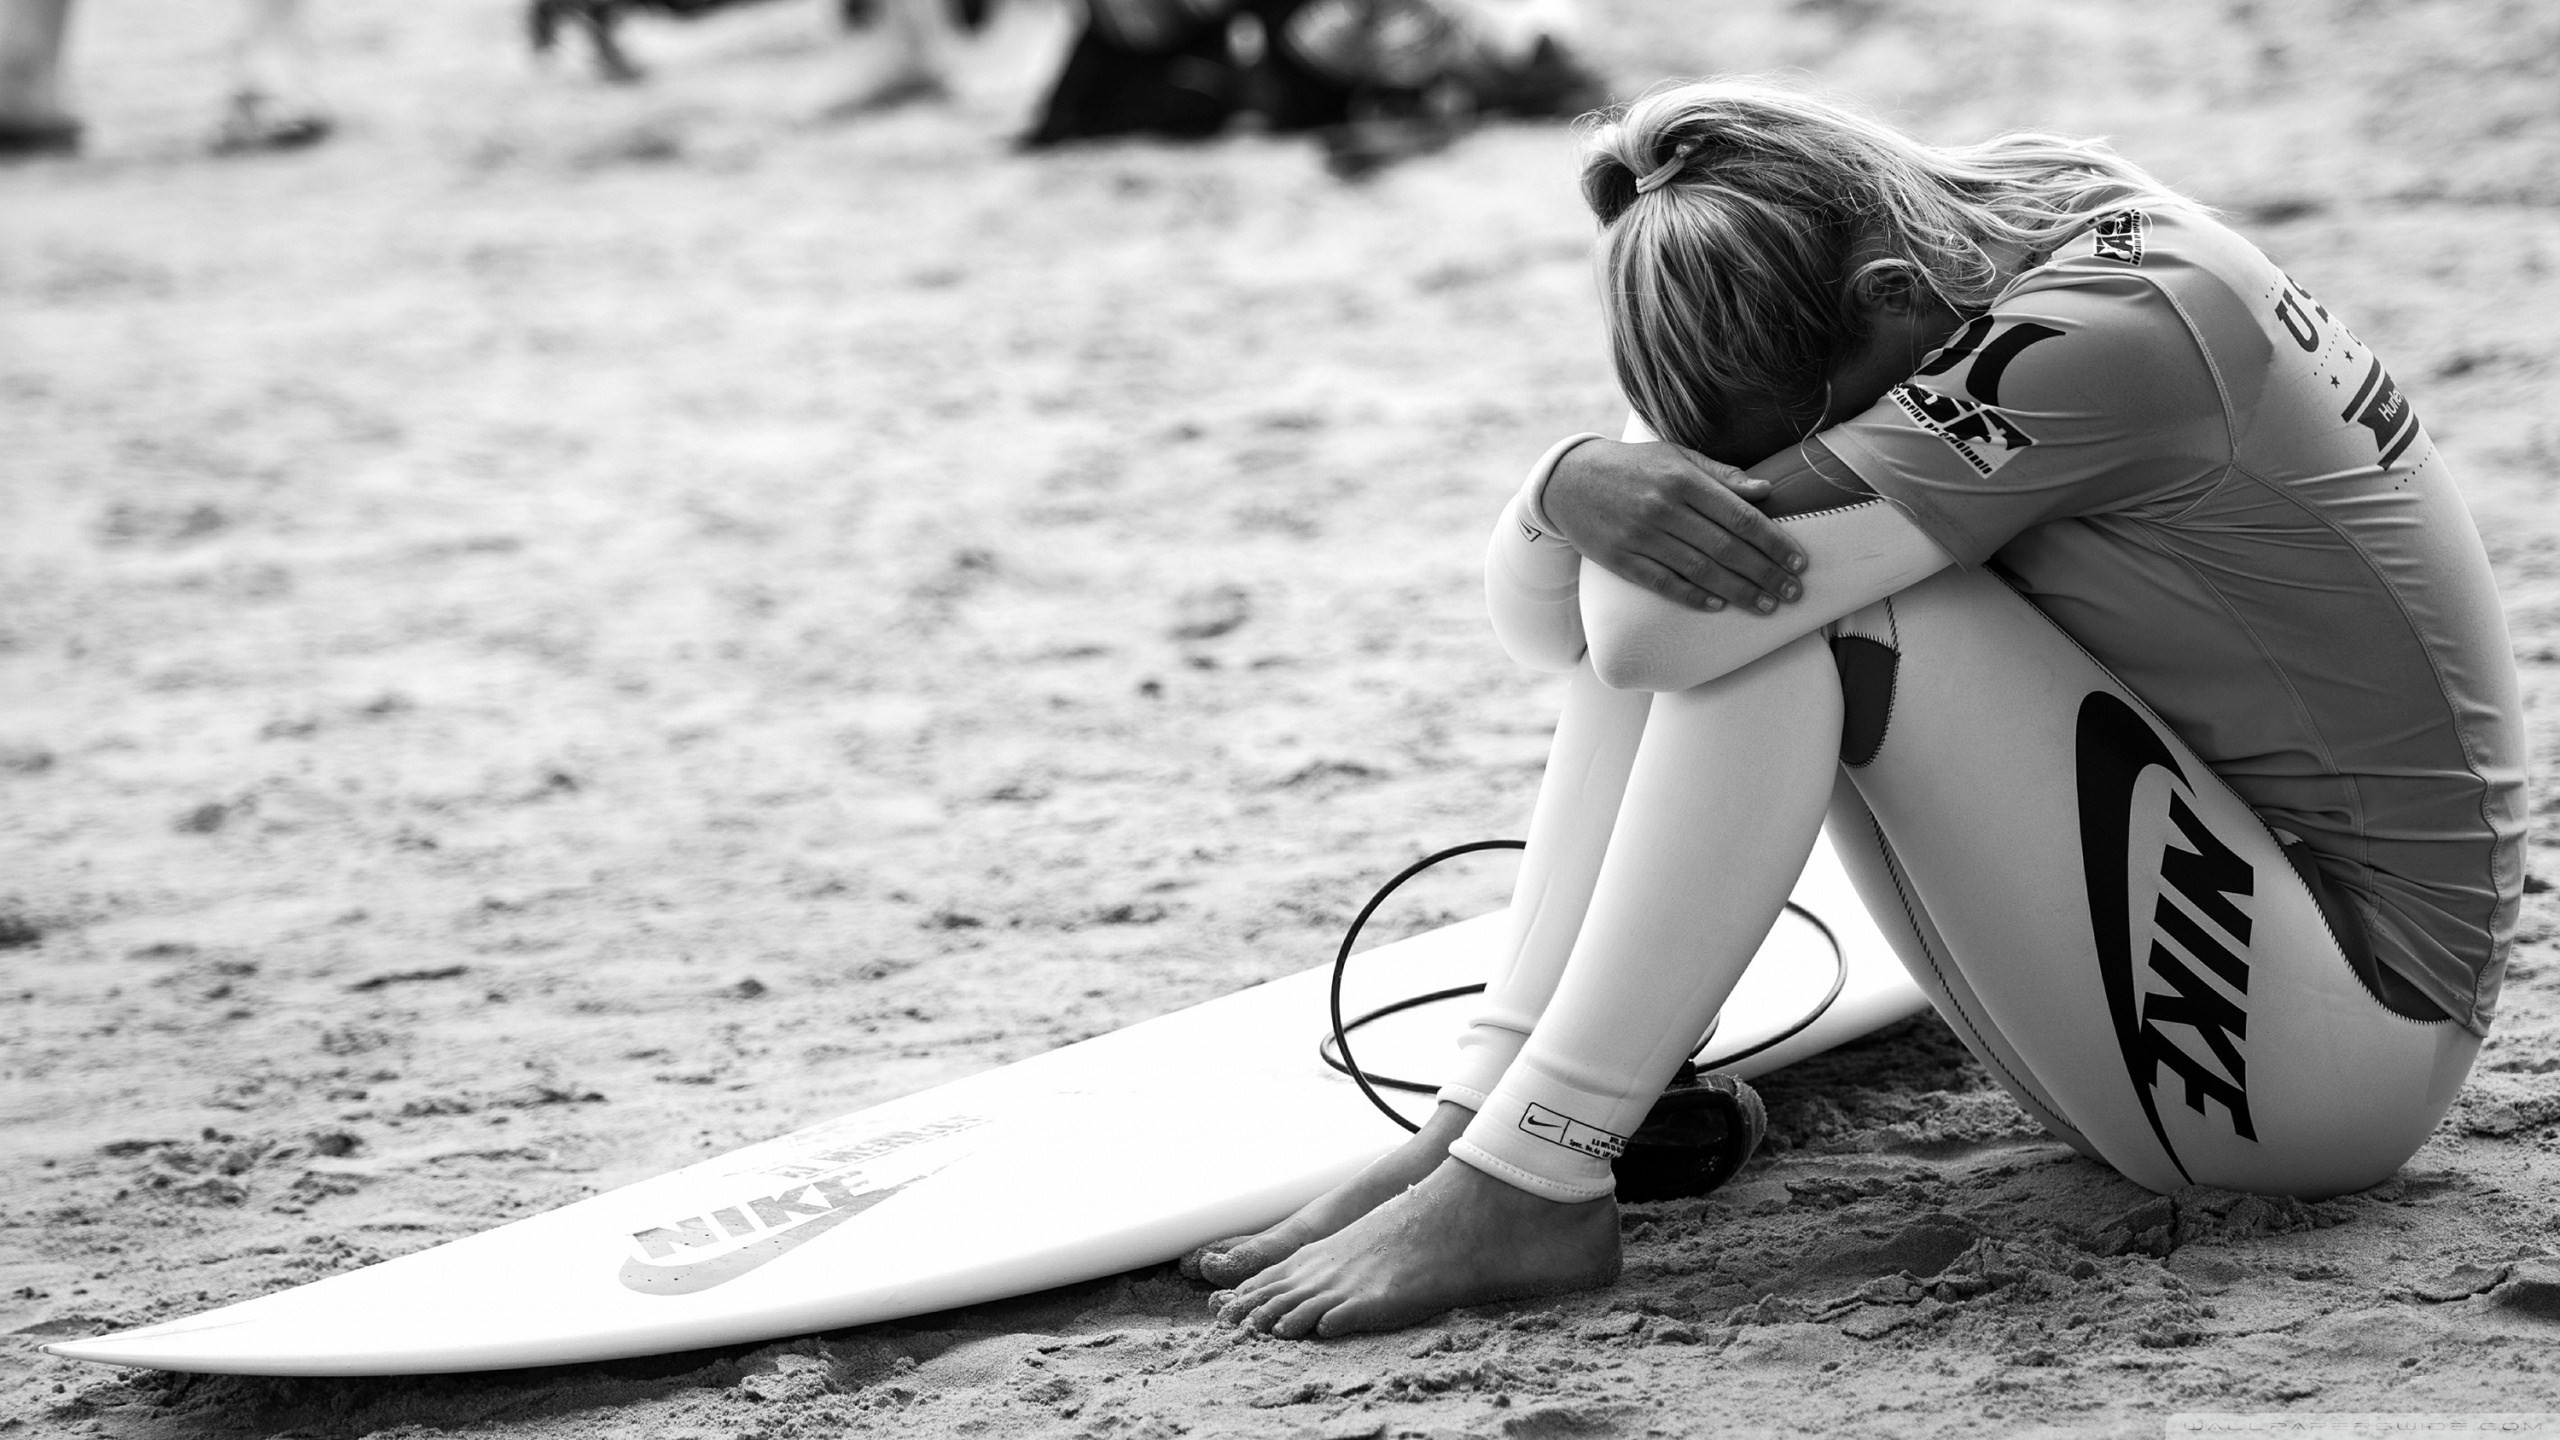 Women Monochrome Nike Surfboards Ponytail 2560x1440